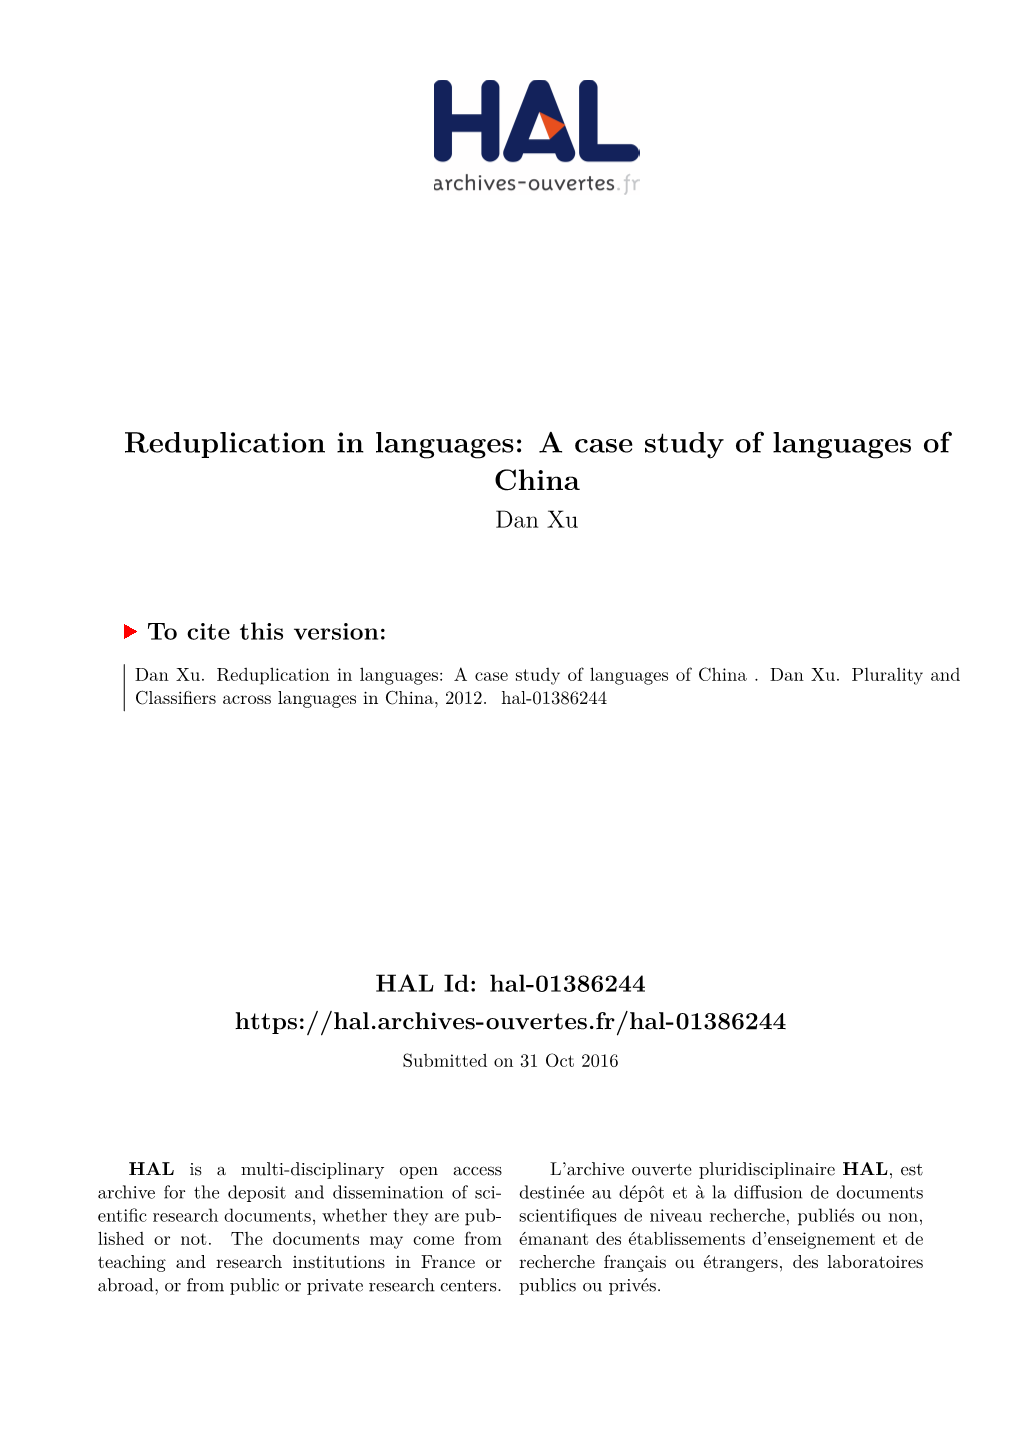 Reduplication in Languages: a Case Study of Languages of China Dan Xu